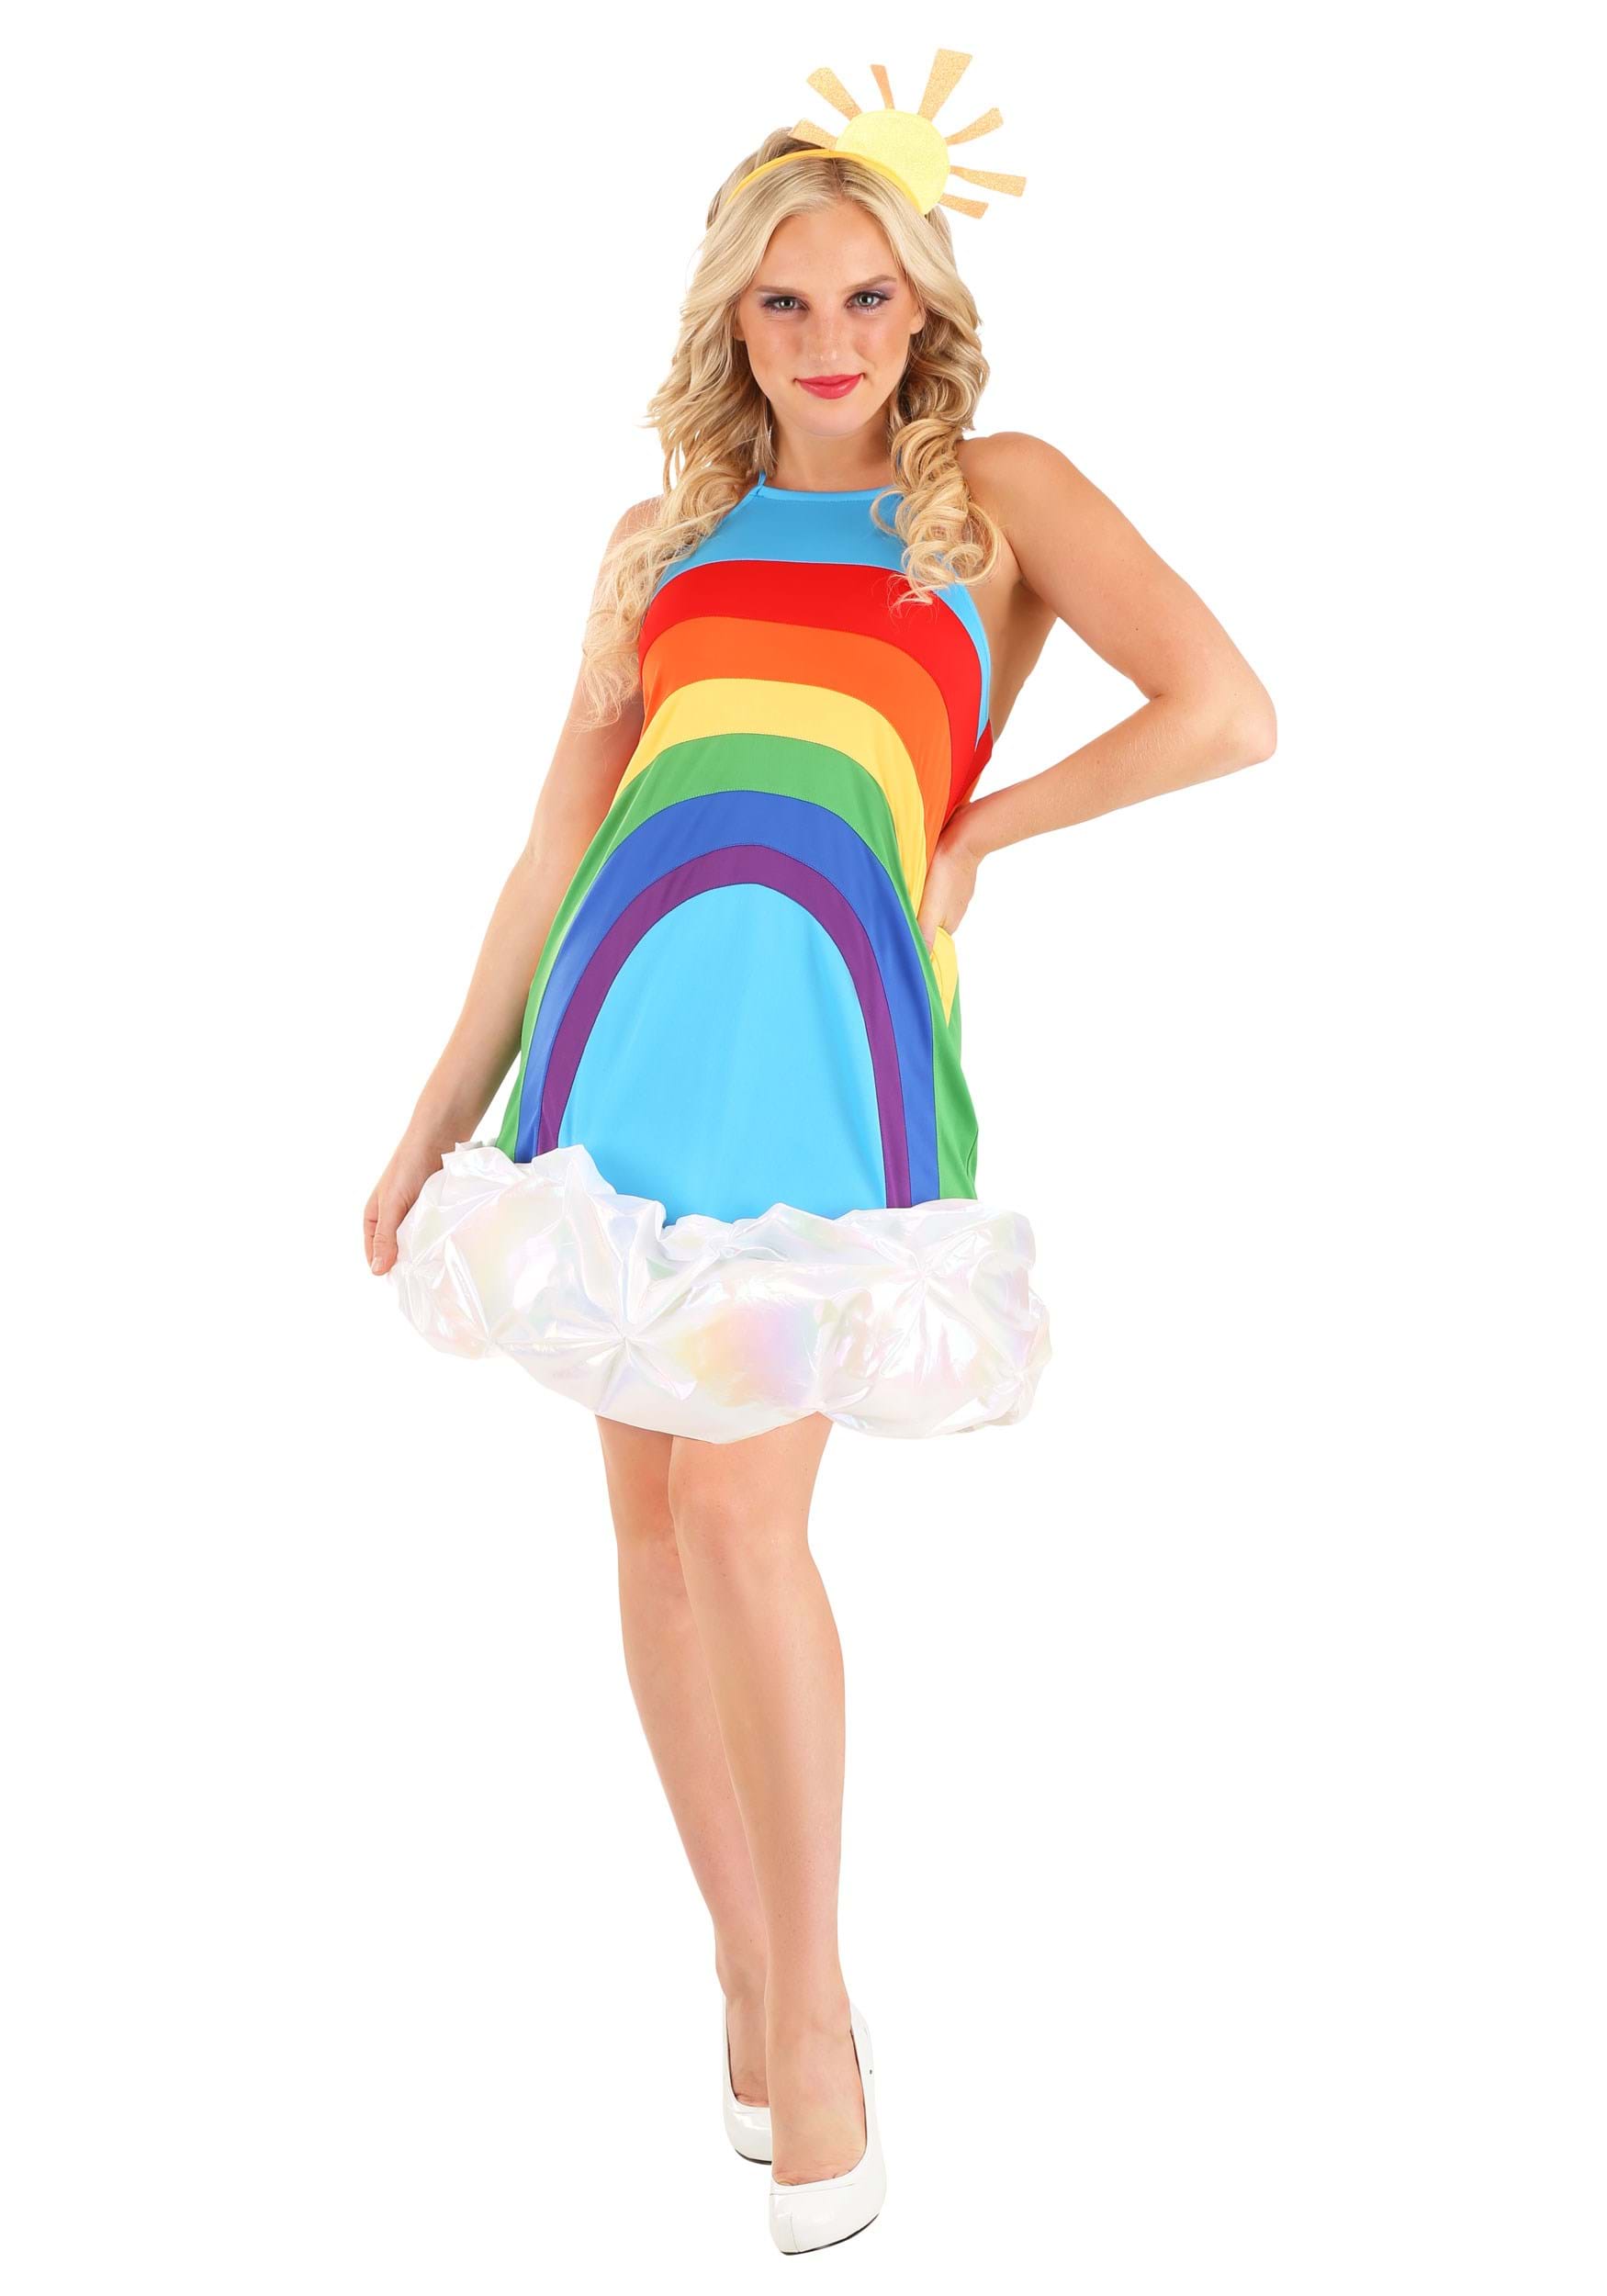 Amazon.com: Badiman Candy Dress for Girls Lollipop Dress Fancy Dress  Rainbow Dress Princess Dress up for Masquerade Role Playing Birthday Dance,  120 : Clothing, Shoes & Jewelry